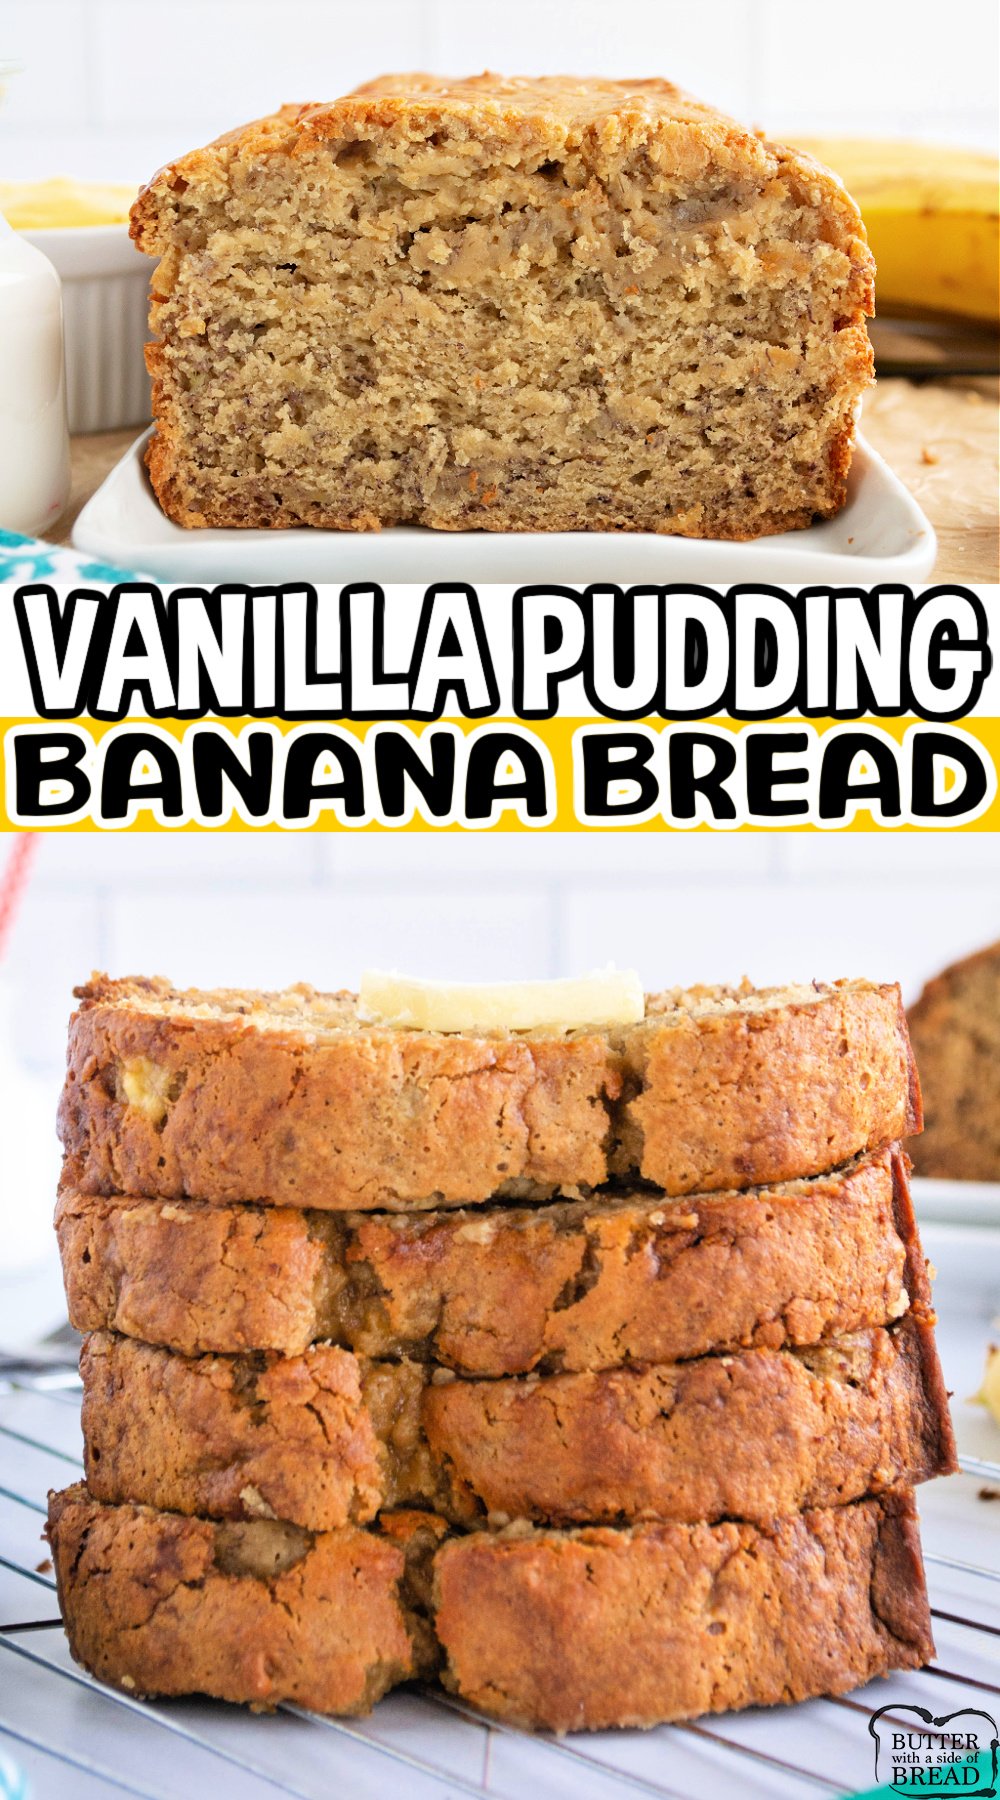 Vanilla Pudding Banana Bread made with ripe bananas and vanilla pudding! The pudding adds so much moisture and flavor to this delicious banana bread recipe.